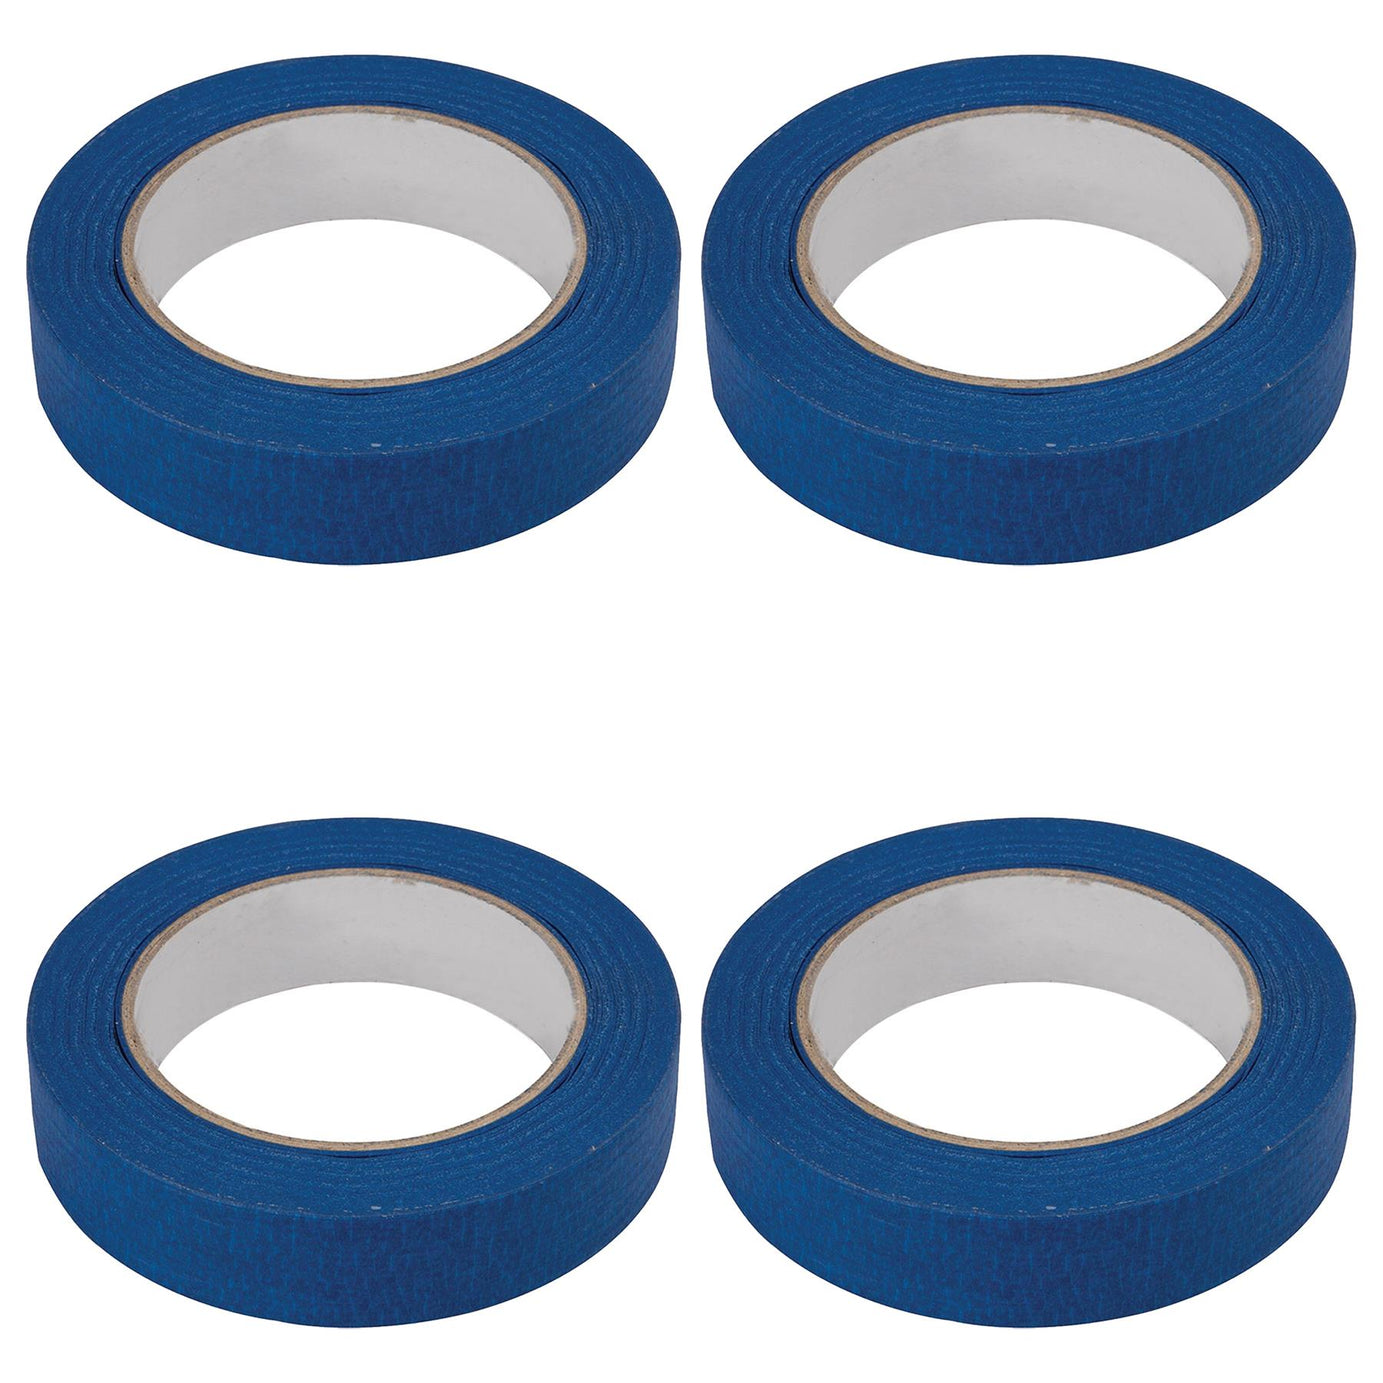 Blue Masking Tape Clean Peel UV Resistant Painters/Decorators 24mm x 50m 4 Rolls